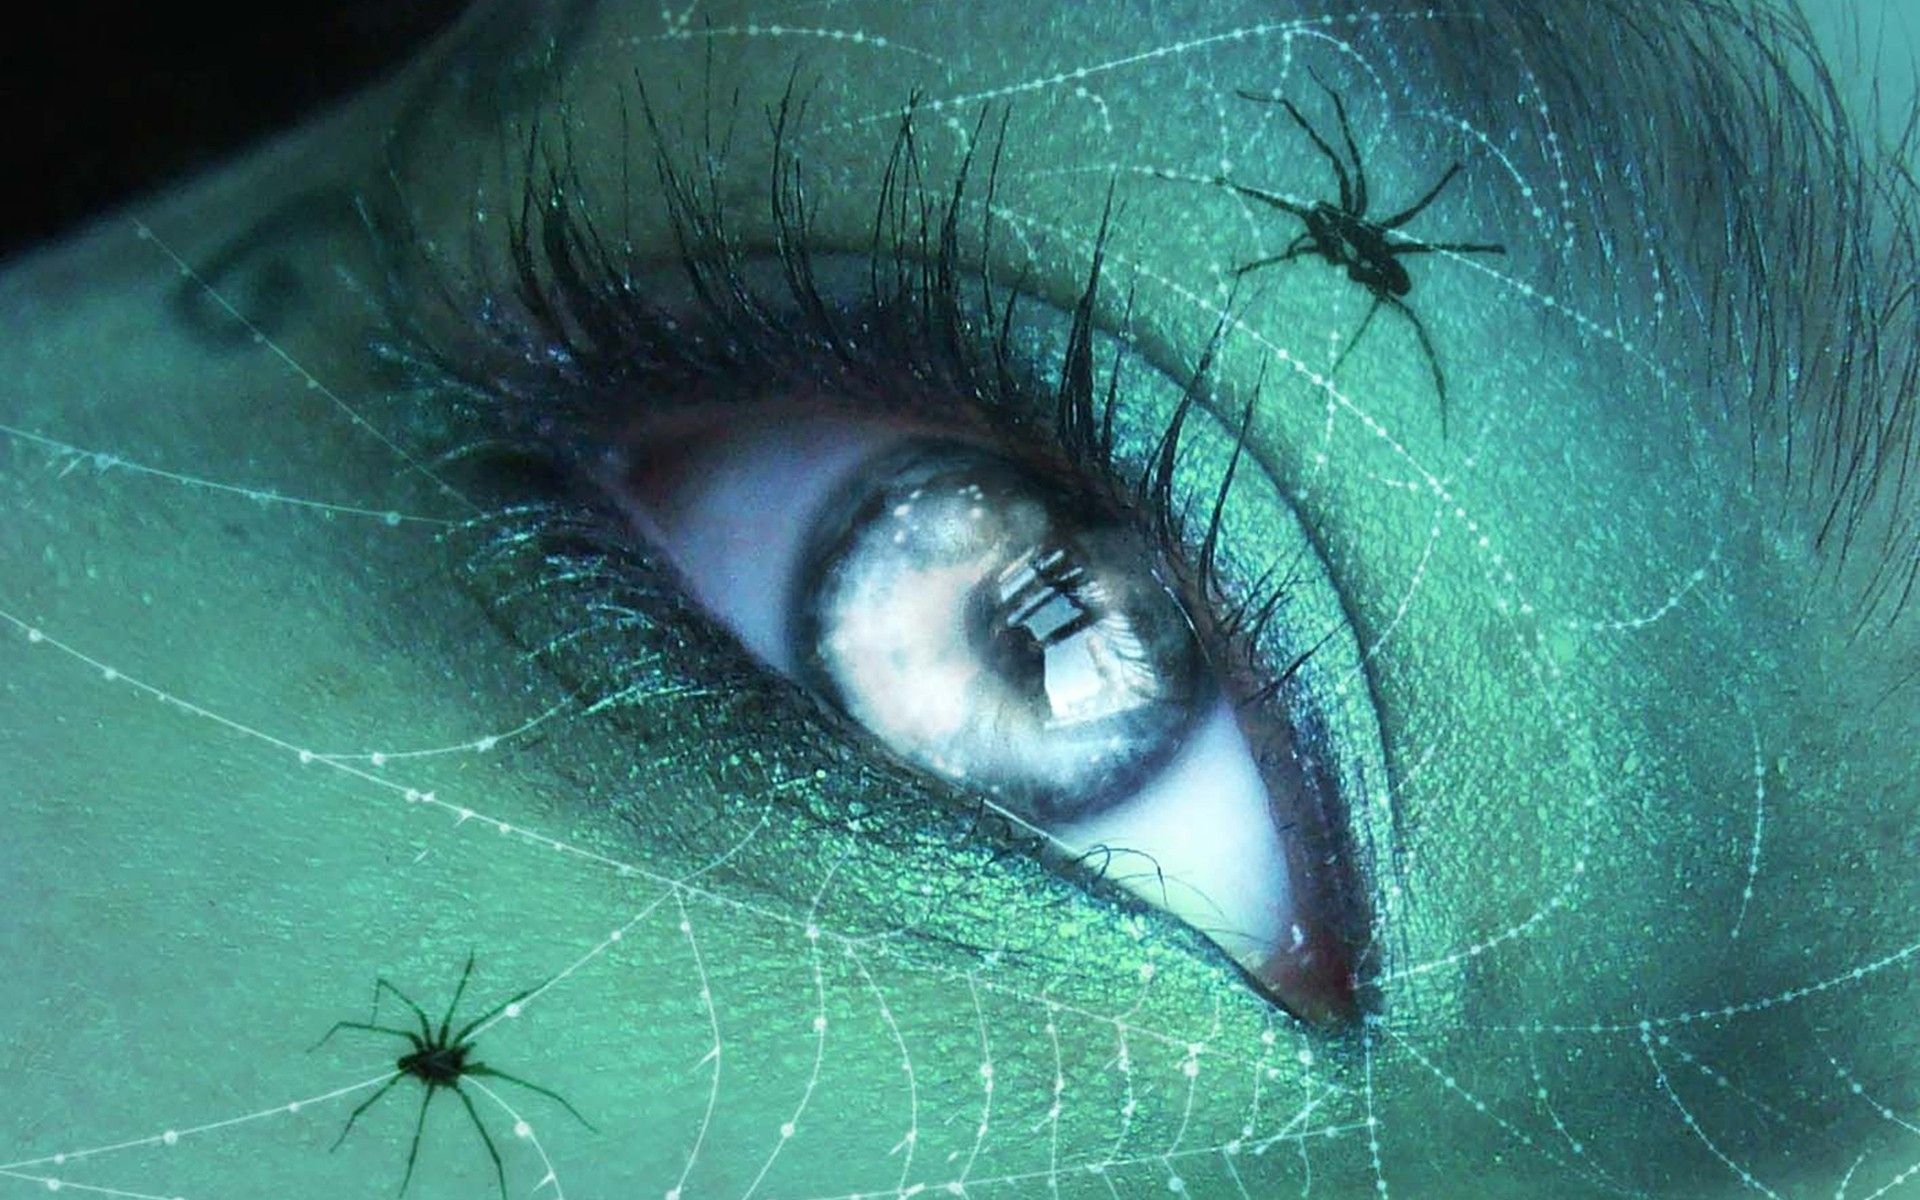 tattoos women creepy eyes halloween spiders spider webs 1920x1200 wallpaper High Quality Wallpaper, High Definition Wallpaper